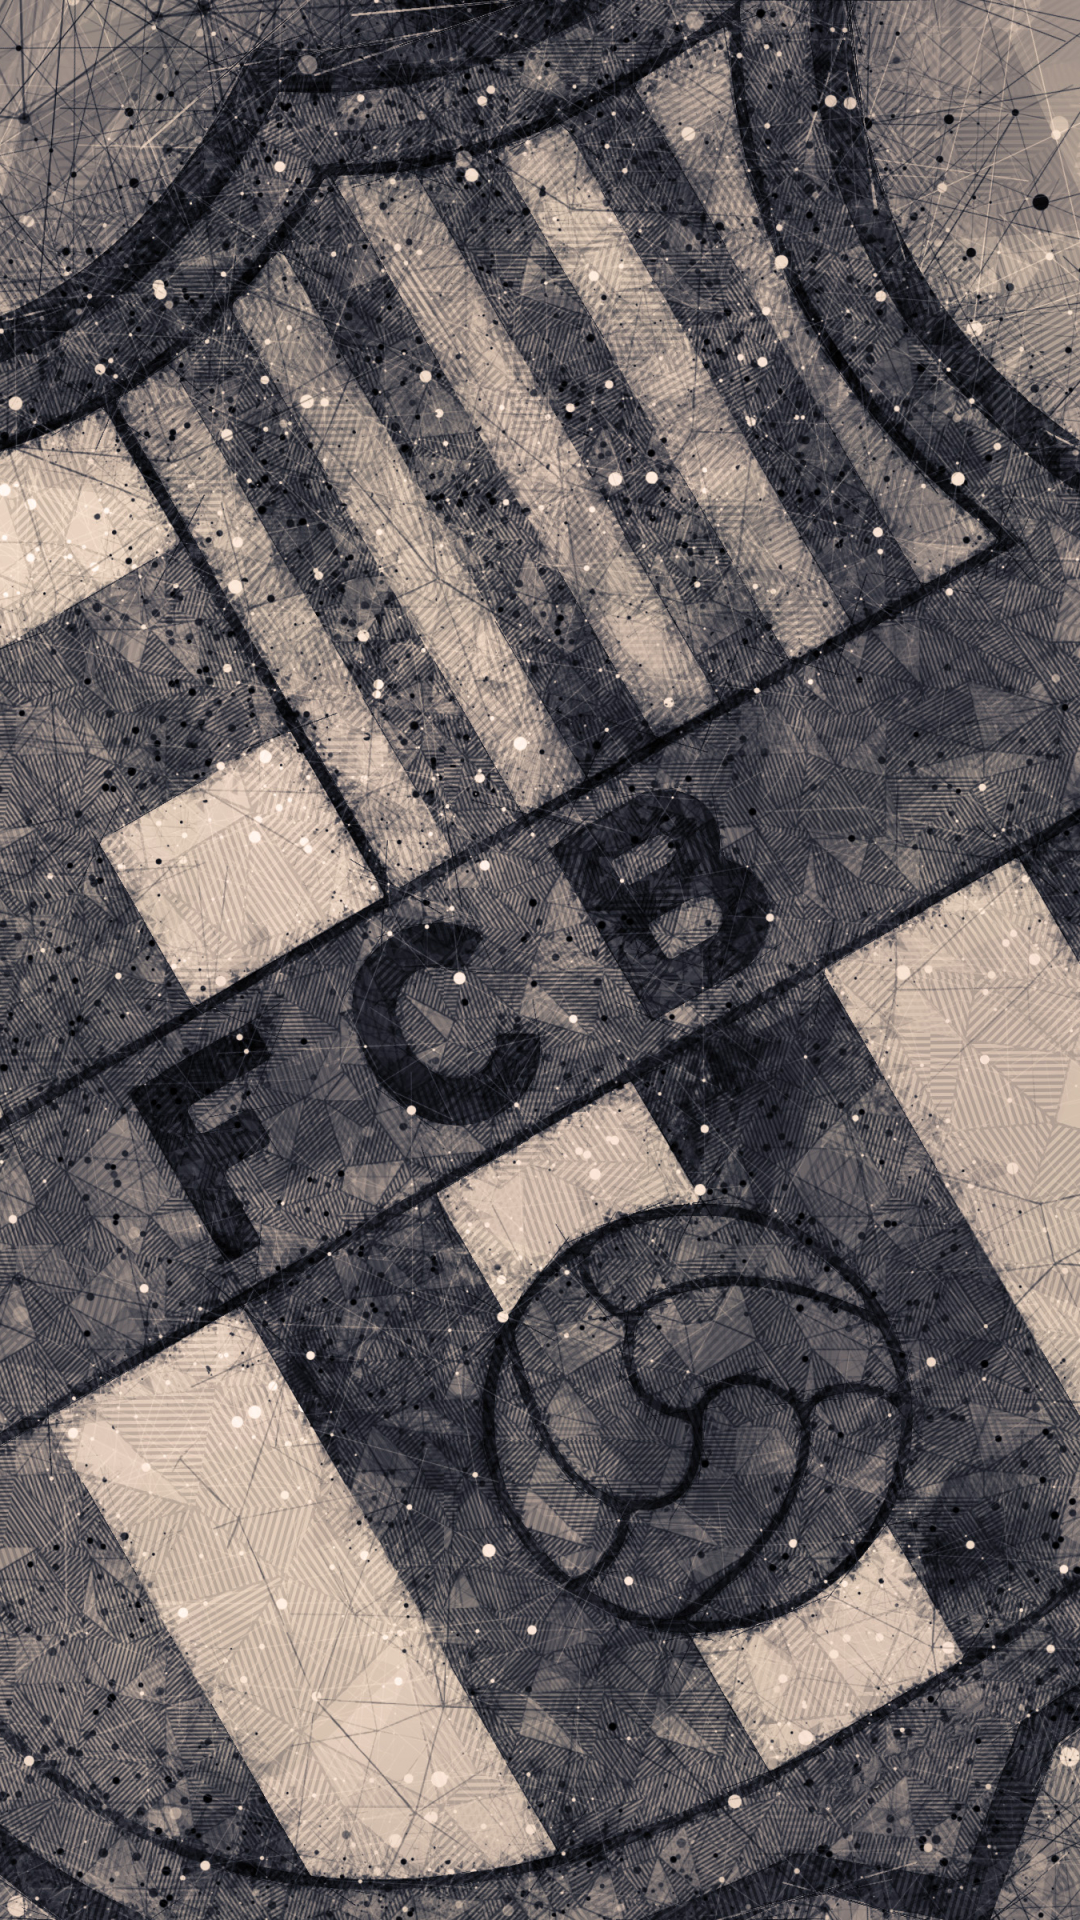 Handy-Wallpaper Sport, Fußball, Logo, Fc Barcelona kostenlos herunterladen.